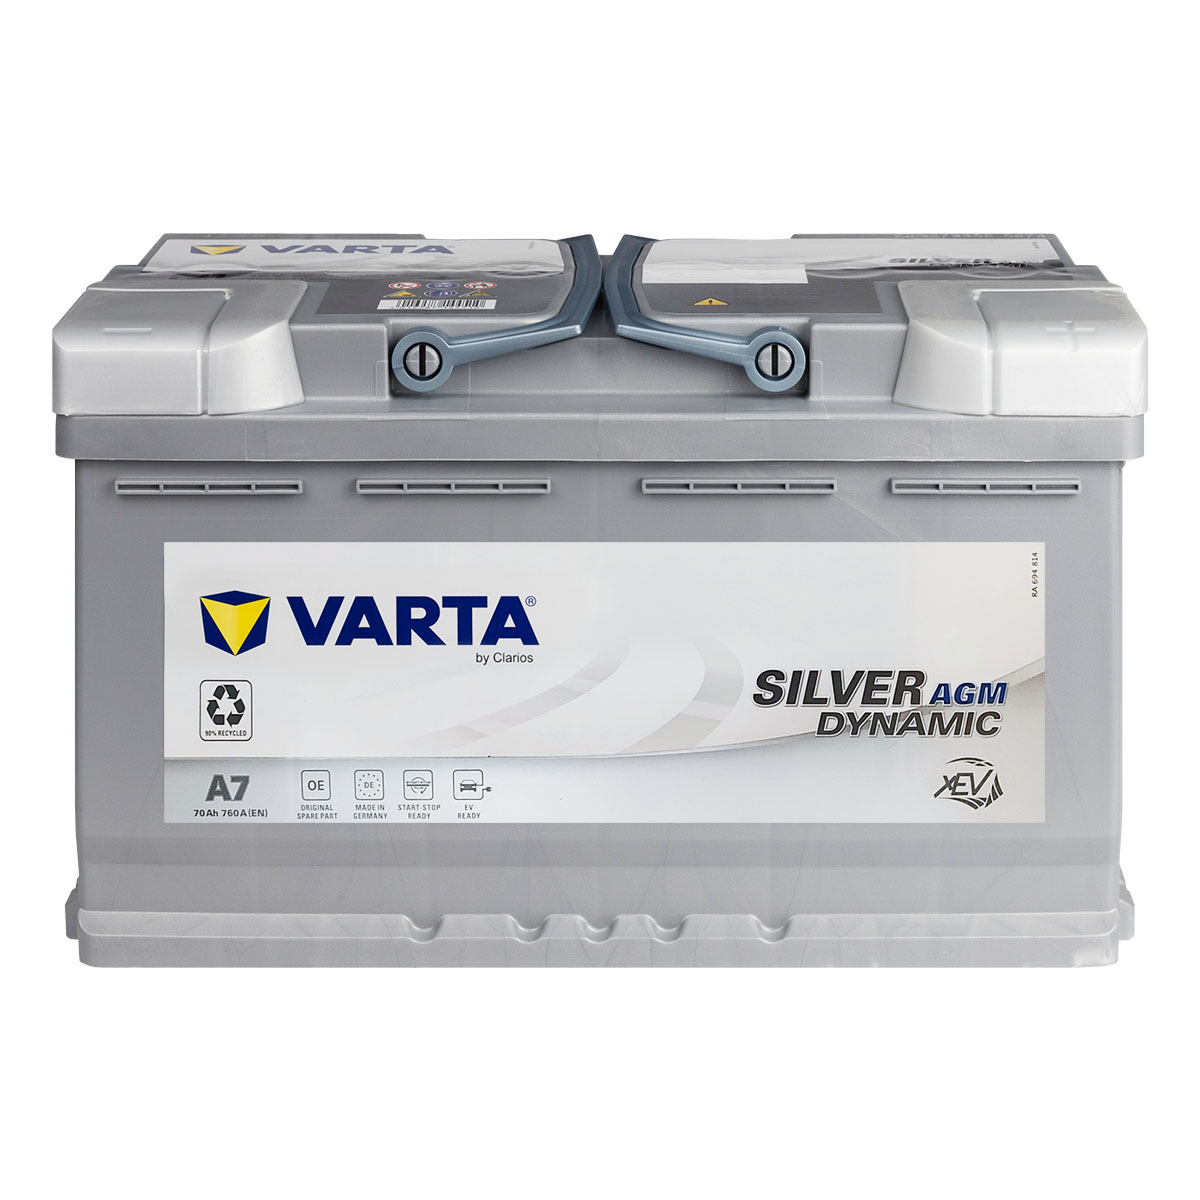 VARTA A7 Silver Dynamic (E39) AGM Autobatterie 12V 70Ah